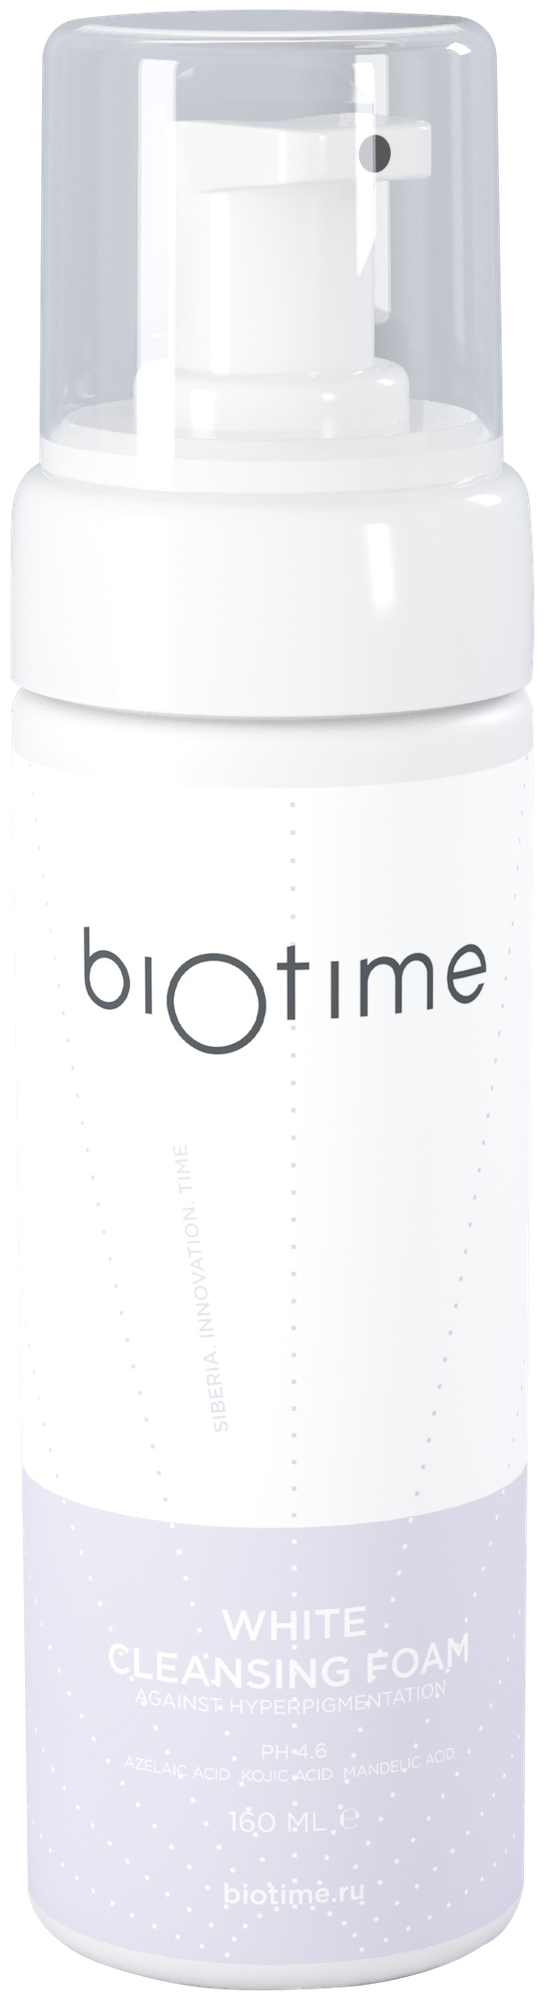 Biotime Очищающая пенка для борьбы с гиперпигментацией WHITE CLEANSING FOAM, 160 мл